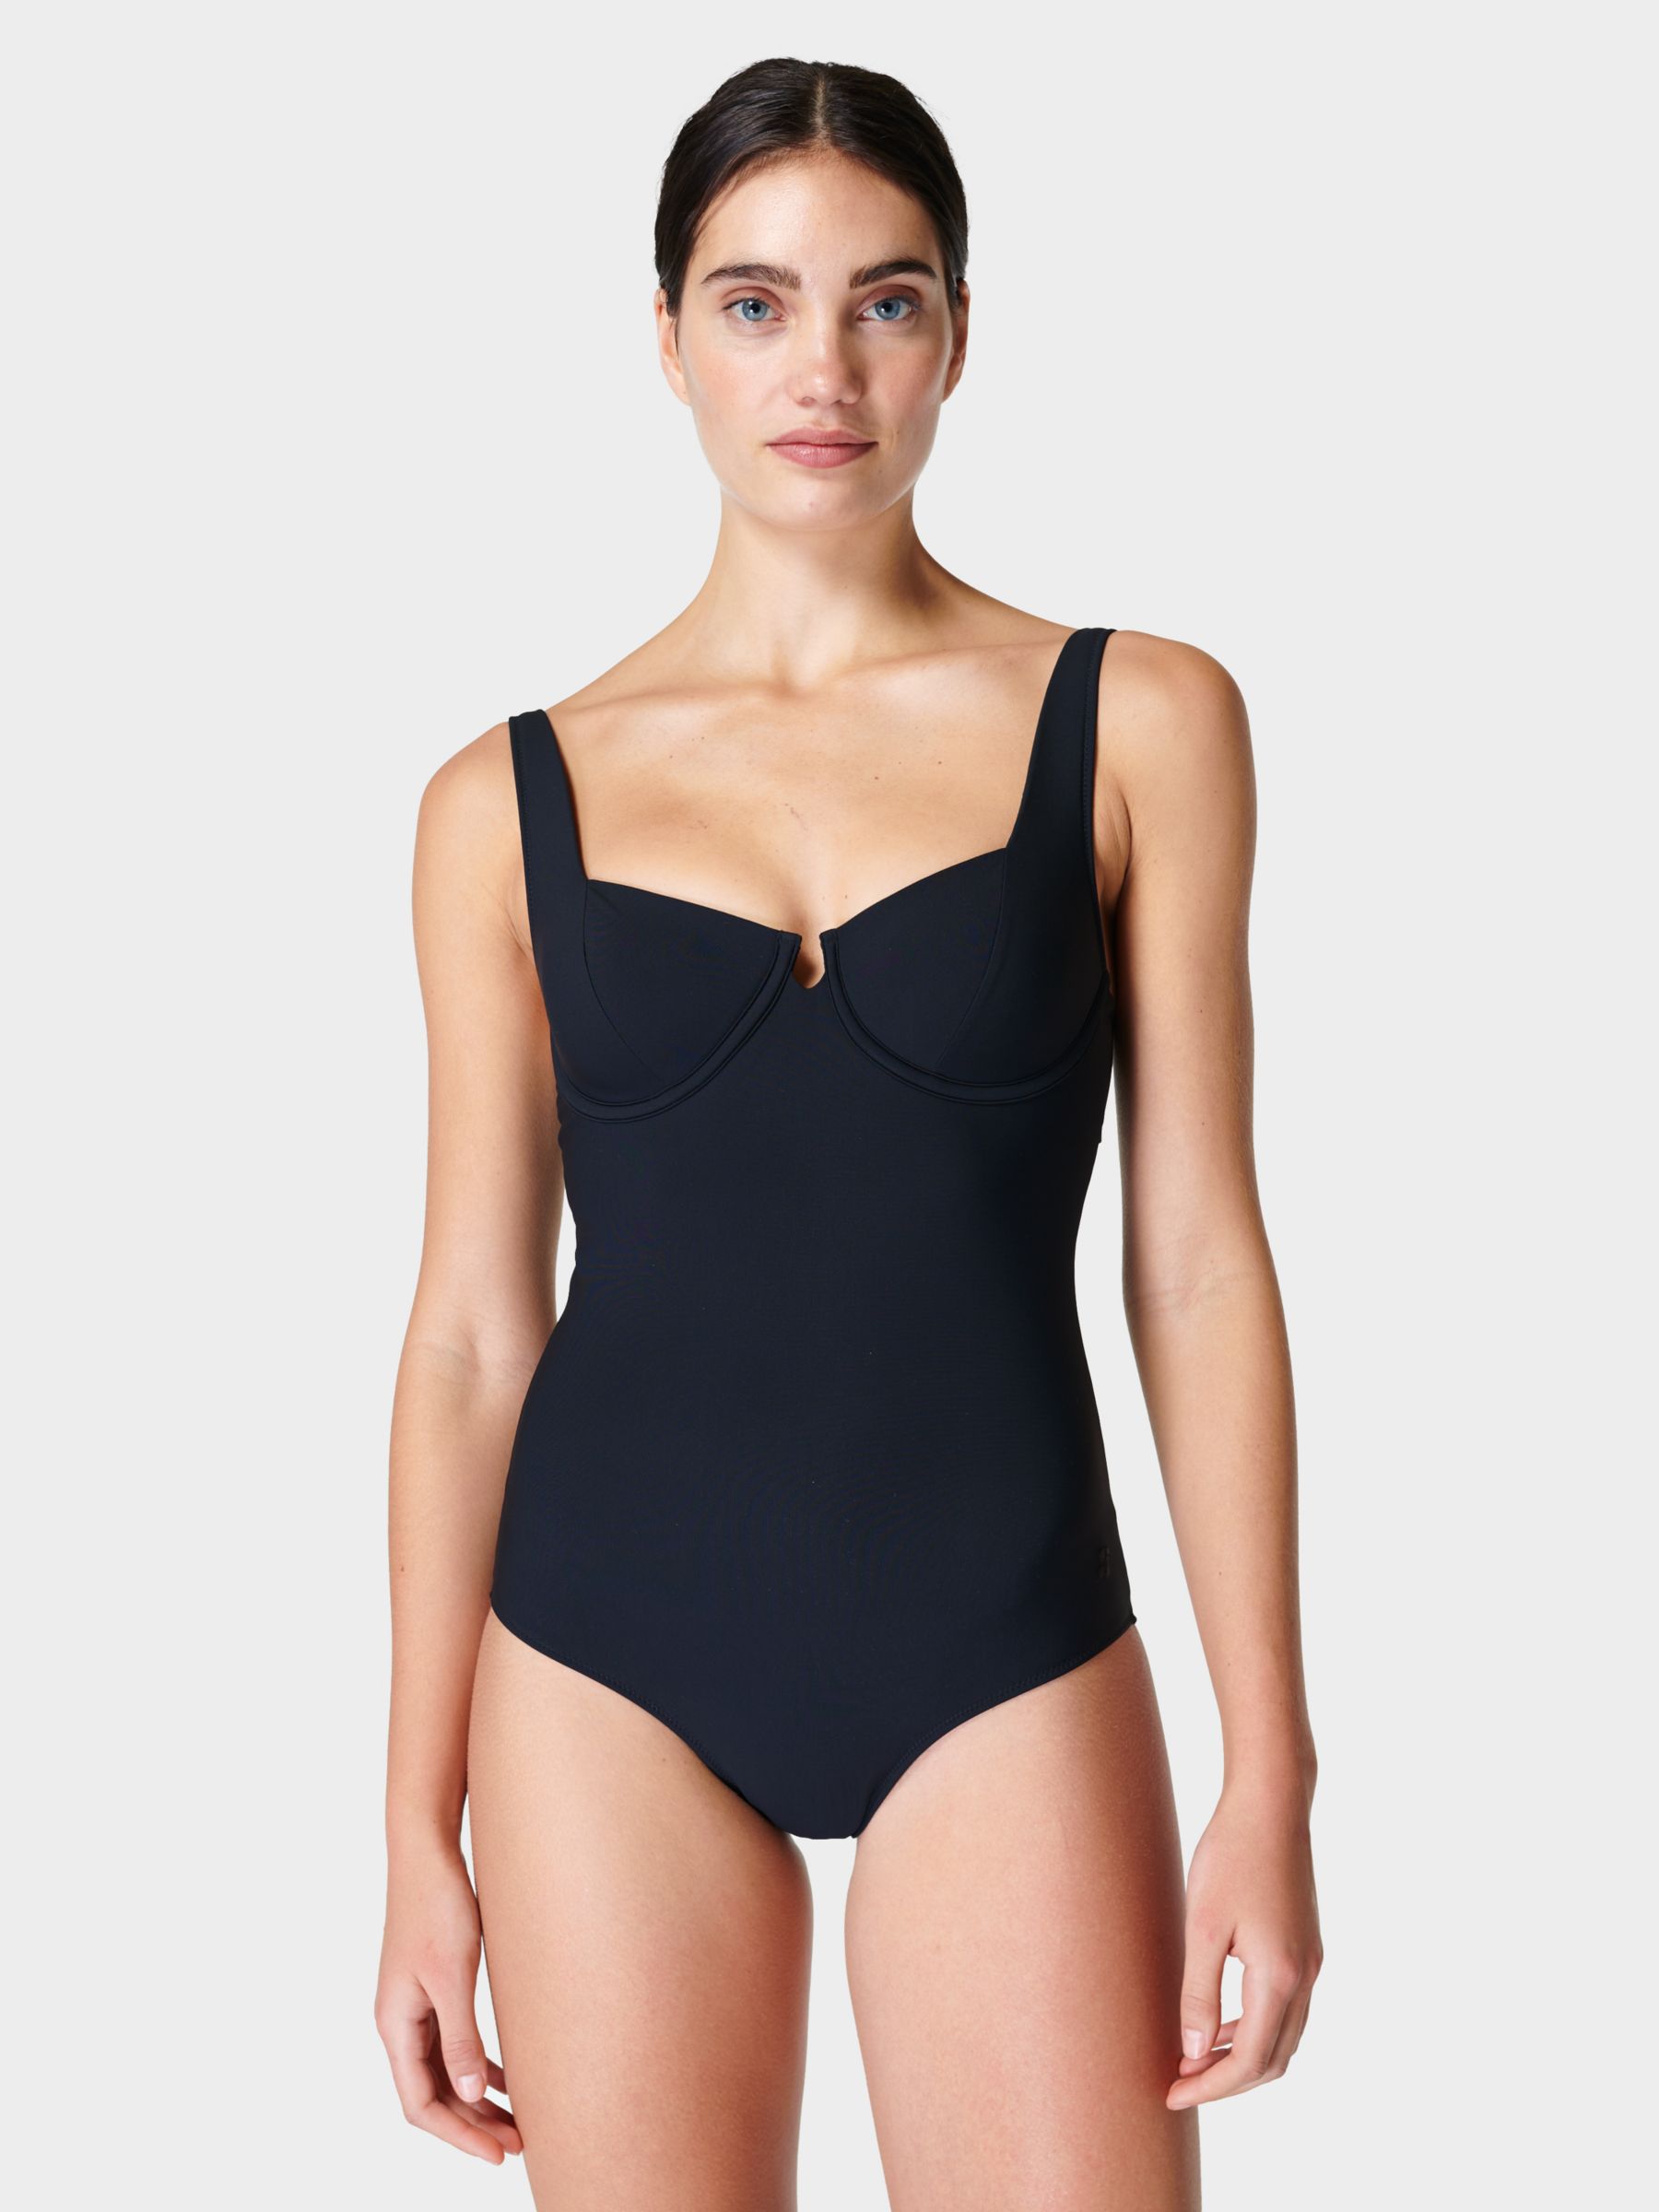 Sweaty Betty Laguna Underwired Swimsuit, Black, L(C-D)